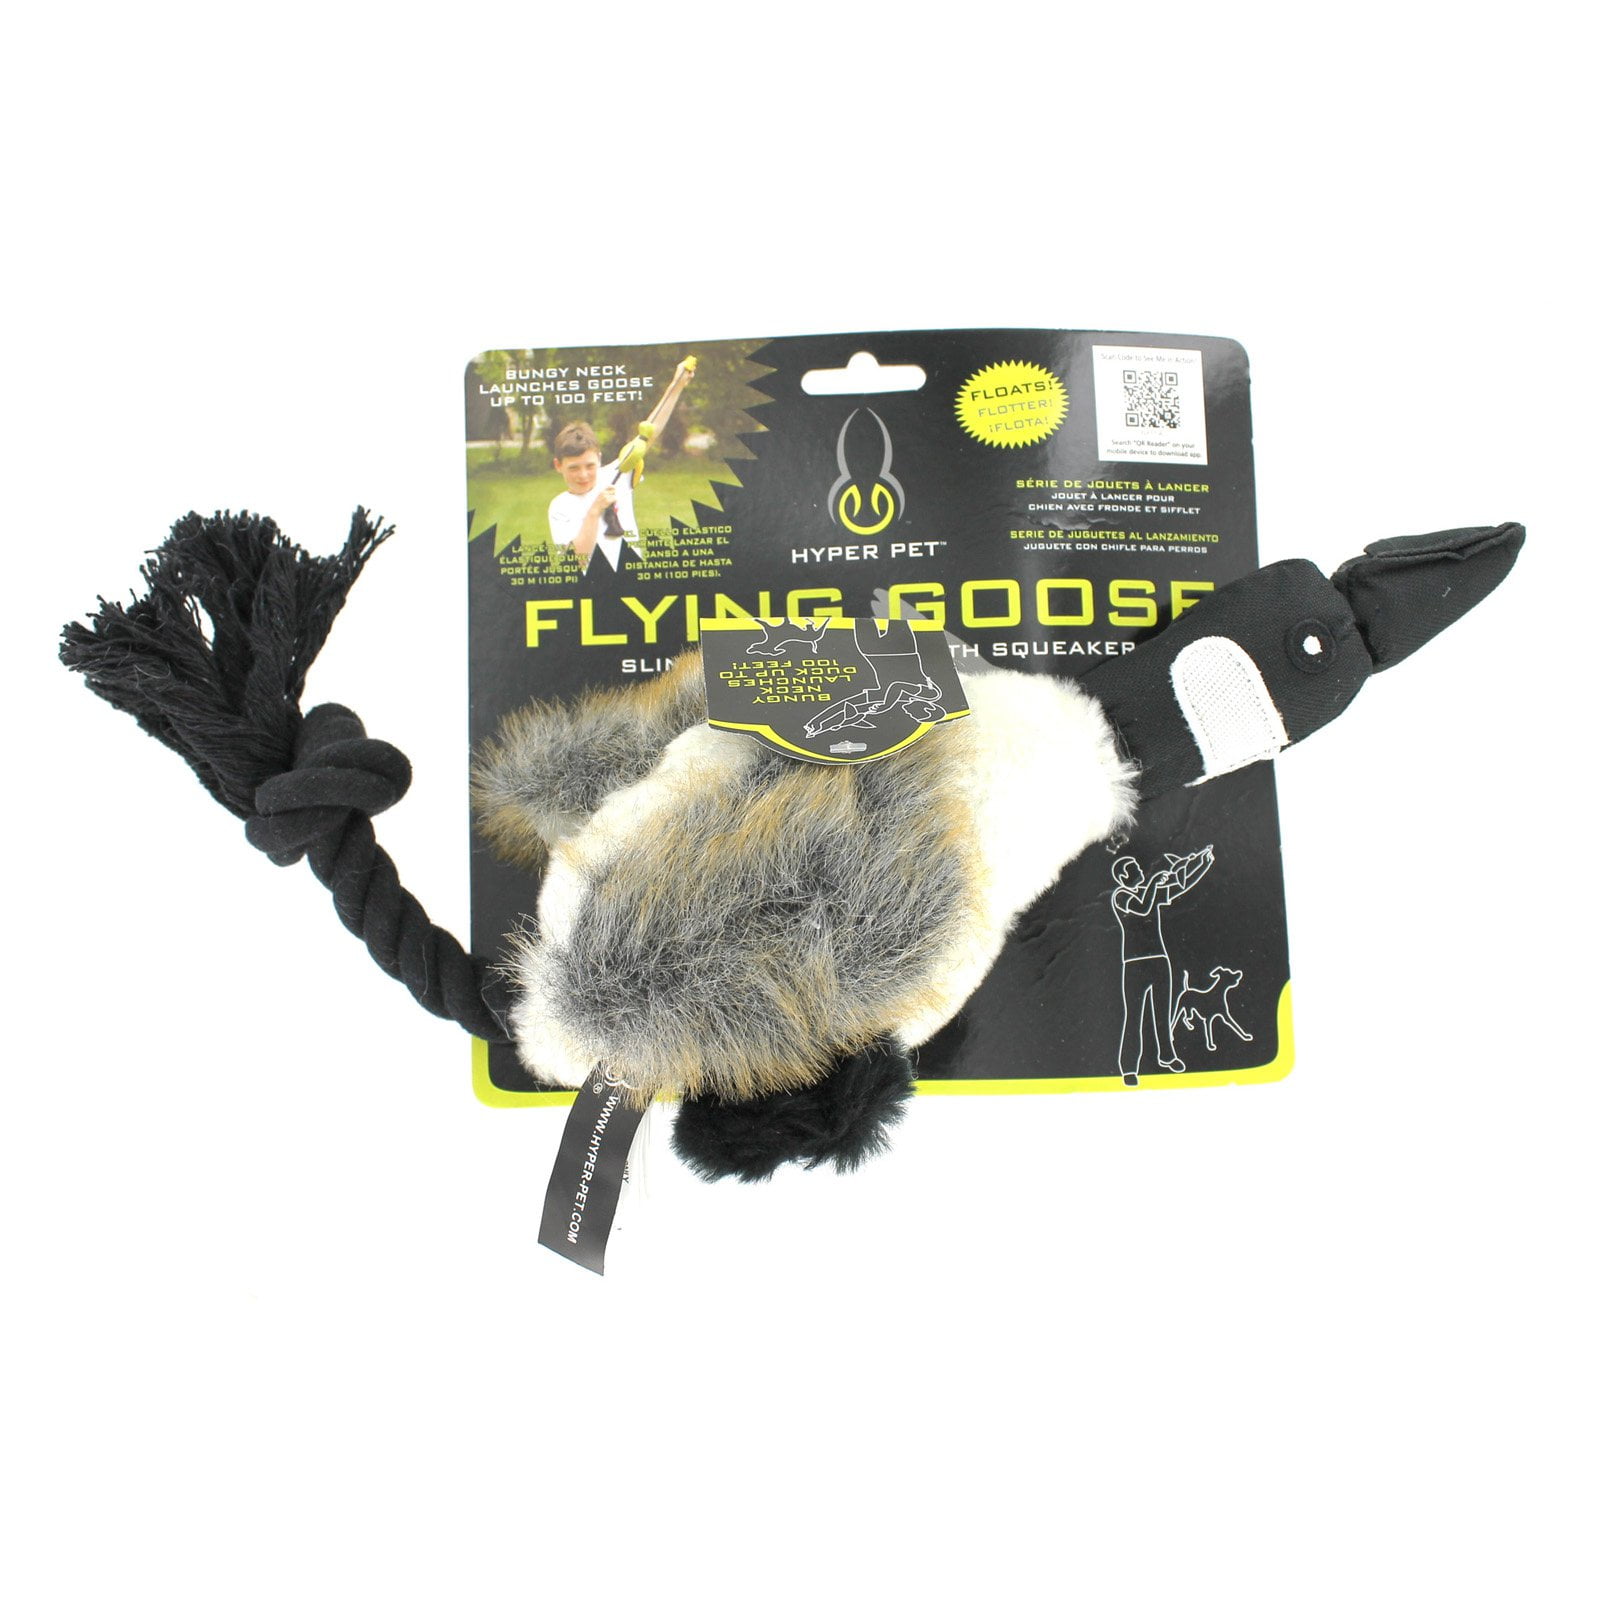 HYPER Pet Throw-n-go Dog Toy Black - Hyp49237 for sale online